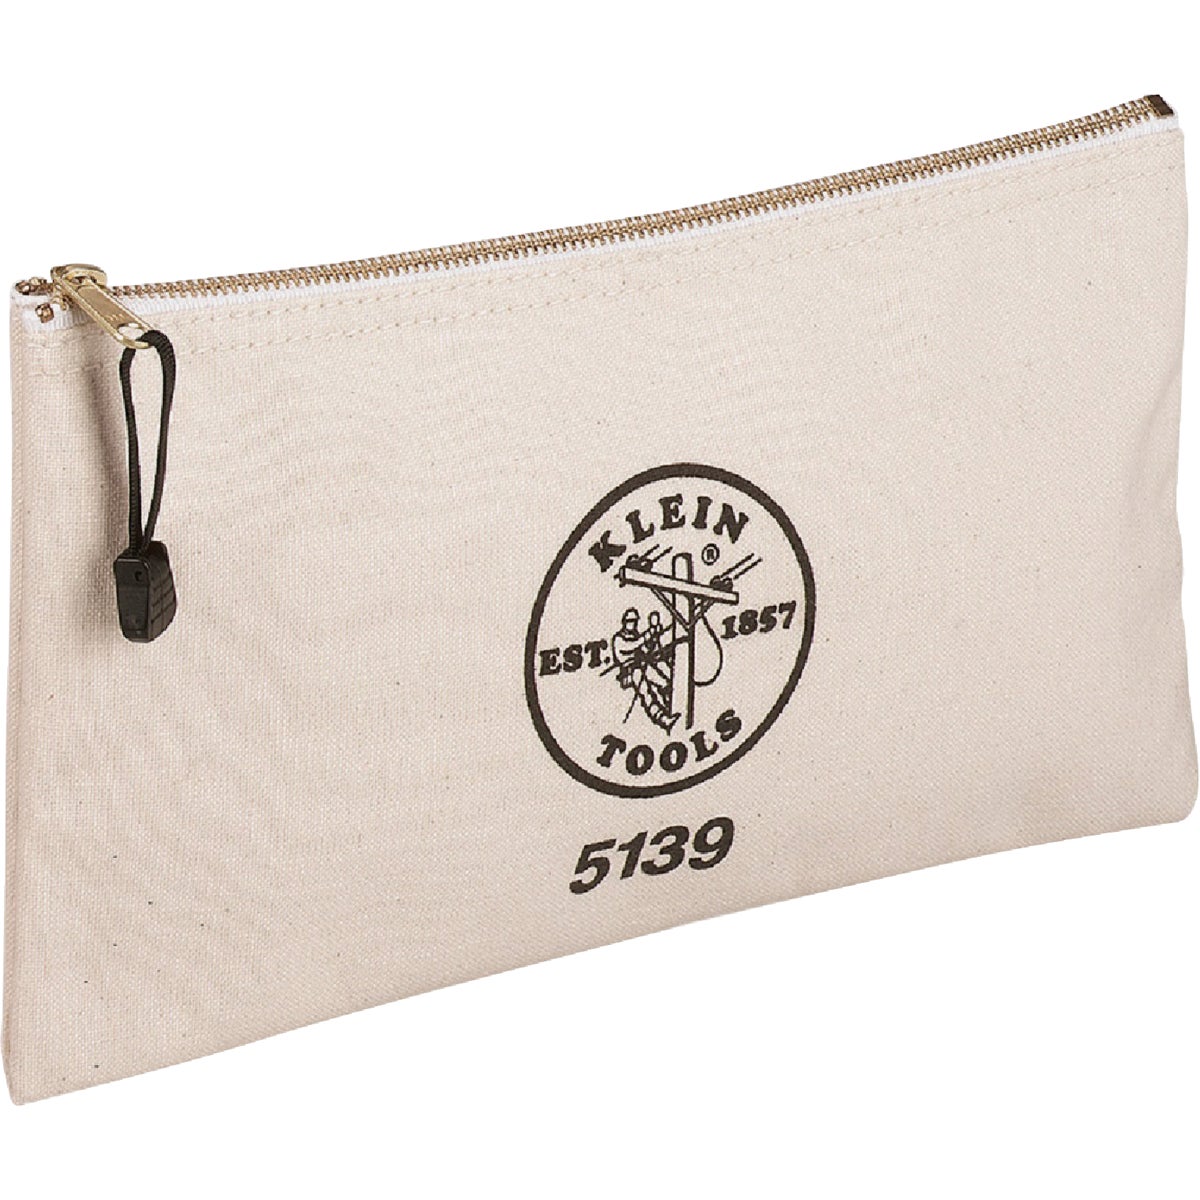 Item 318612, Sturdy No. 10 canvas pouch with heavy-duty brass zipper.